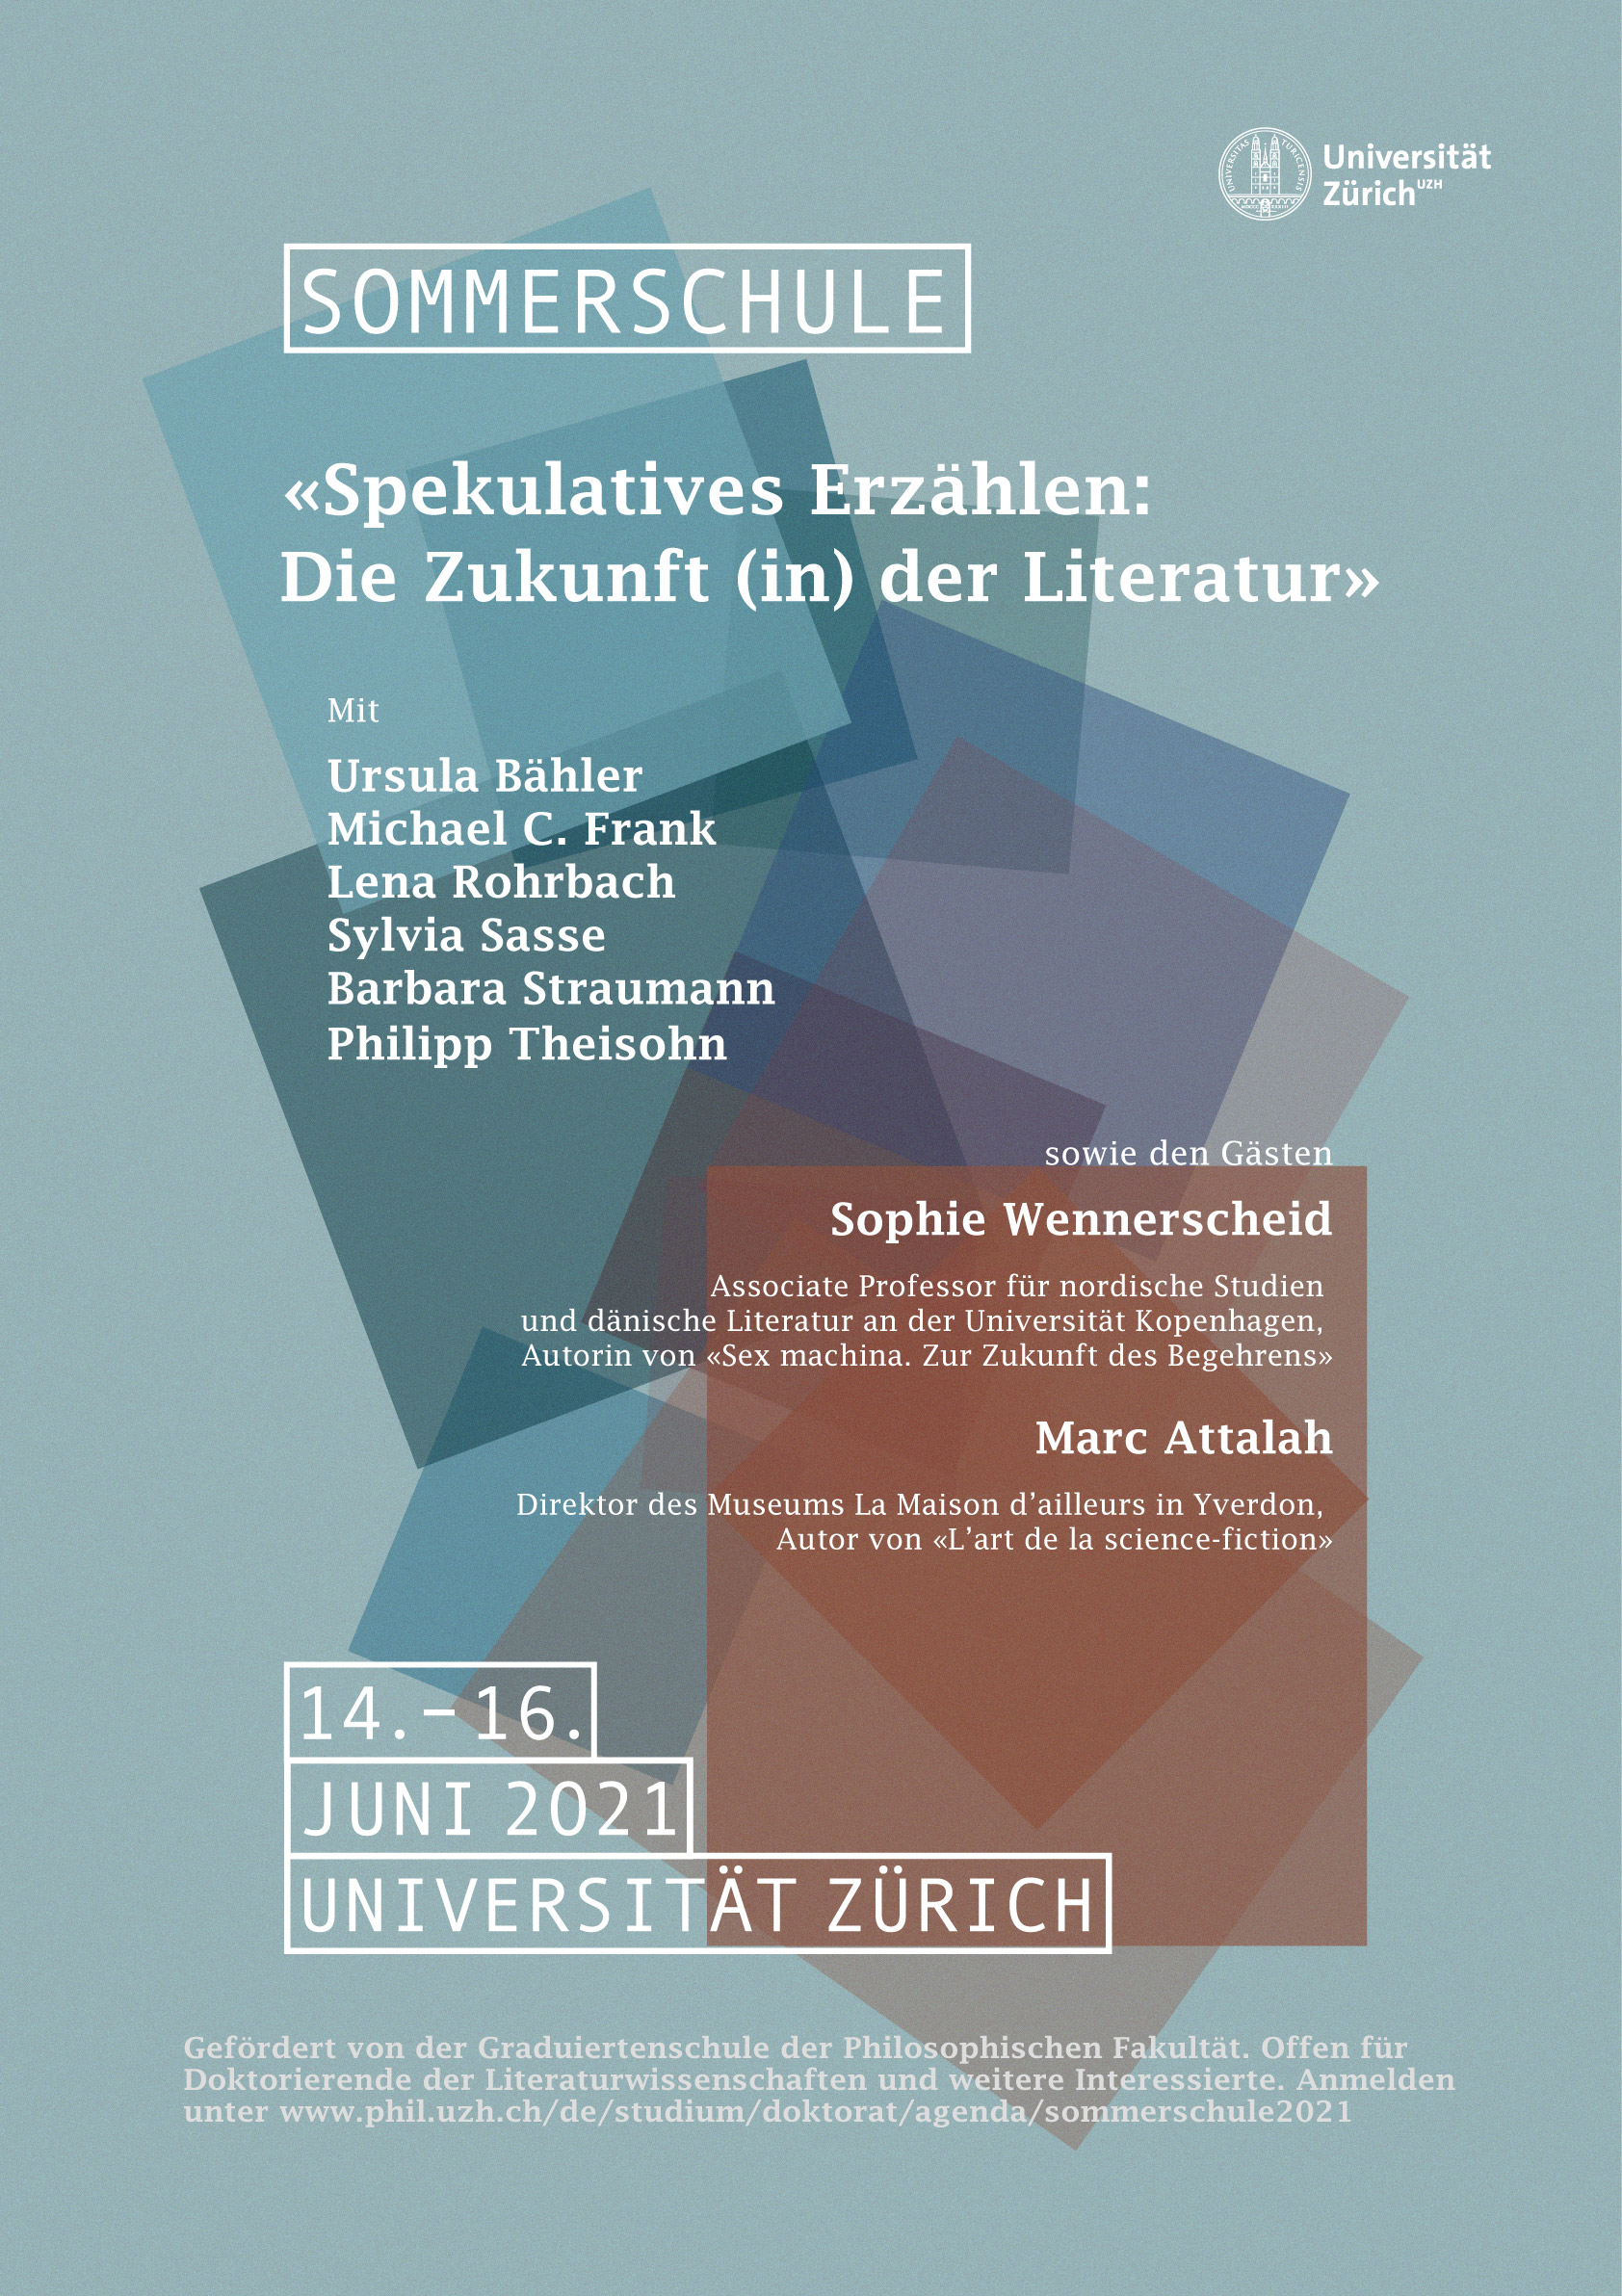 Summerschool of the University of Zurich 2021